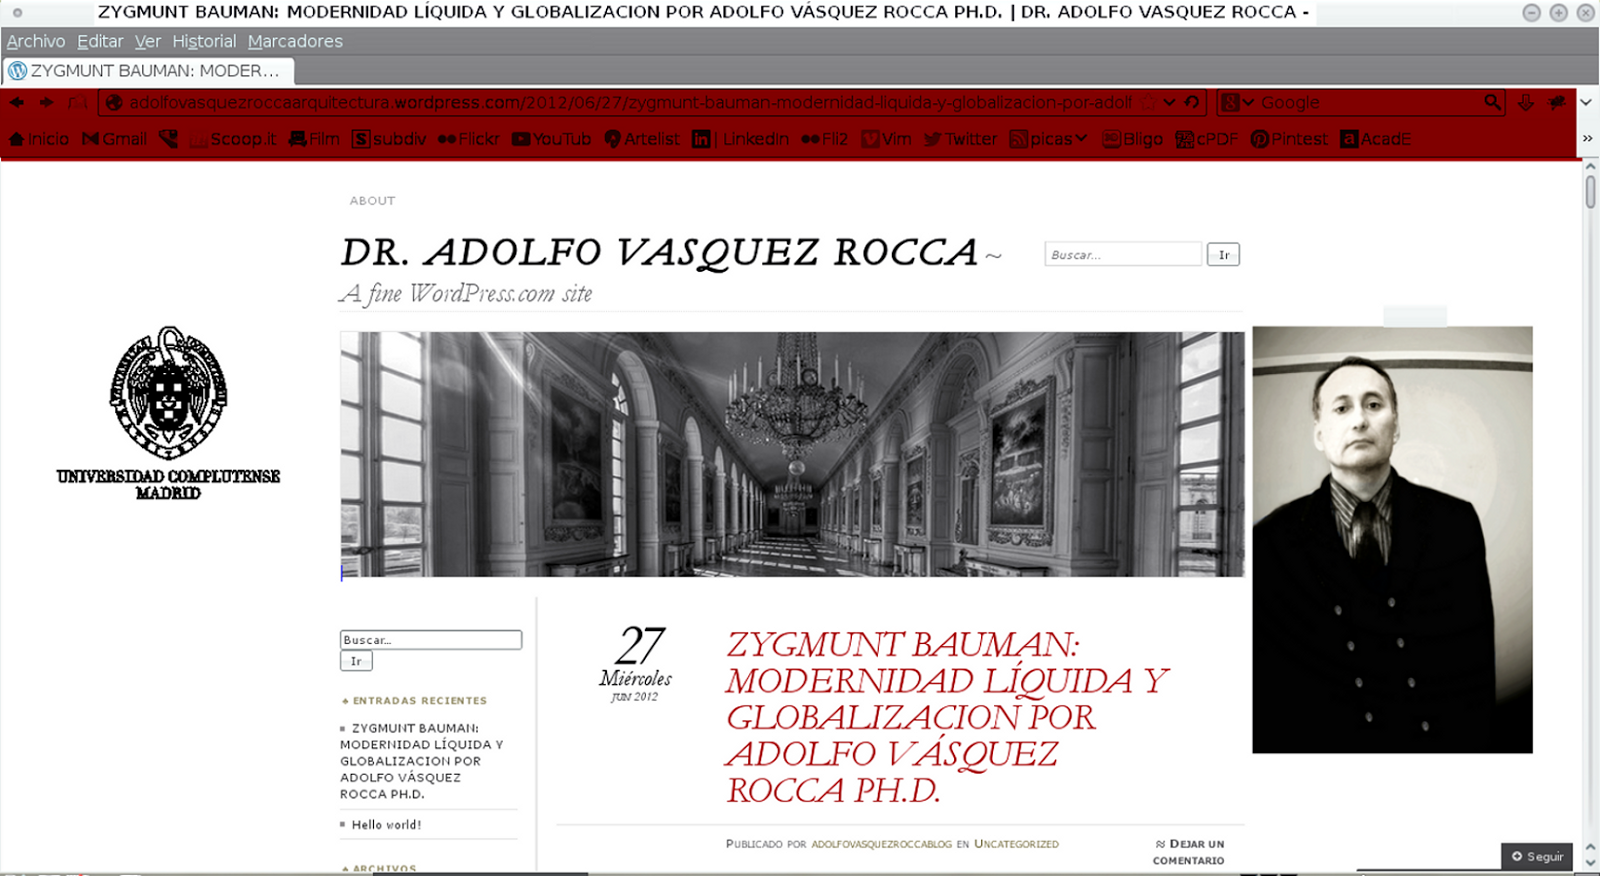 http://4.bp.blogspot.com/-aTDehn39dsY/Uqjg1EX-QTI/AAAAAAAAMTY/4p6rO-DgoXA/s1600/Seminario+Z.+BAUMAN+_+Modernidad+L%C3%ADquida+_+Dr.+Adolfo+V%C3%A1squez+Rocca.png